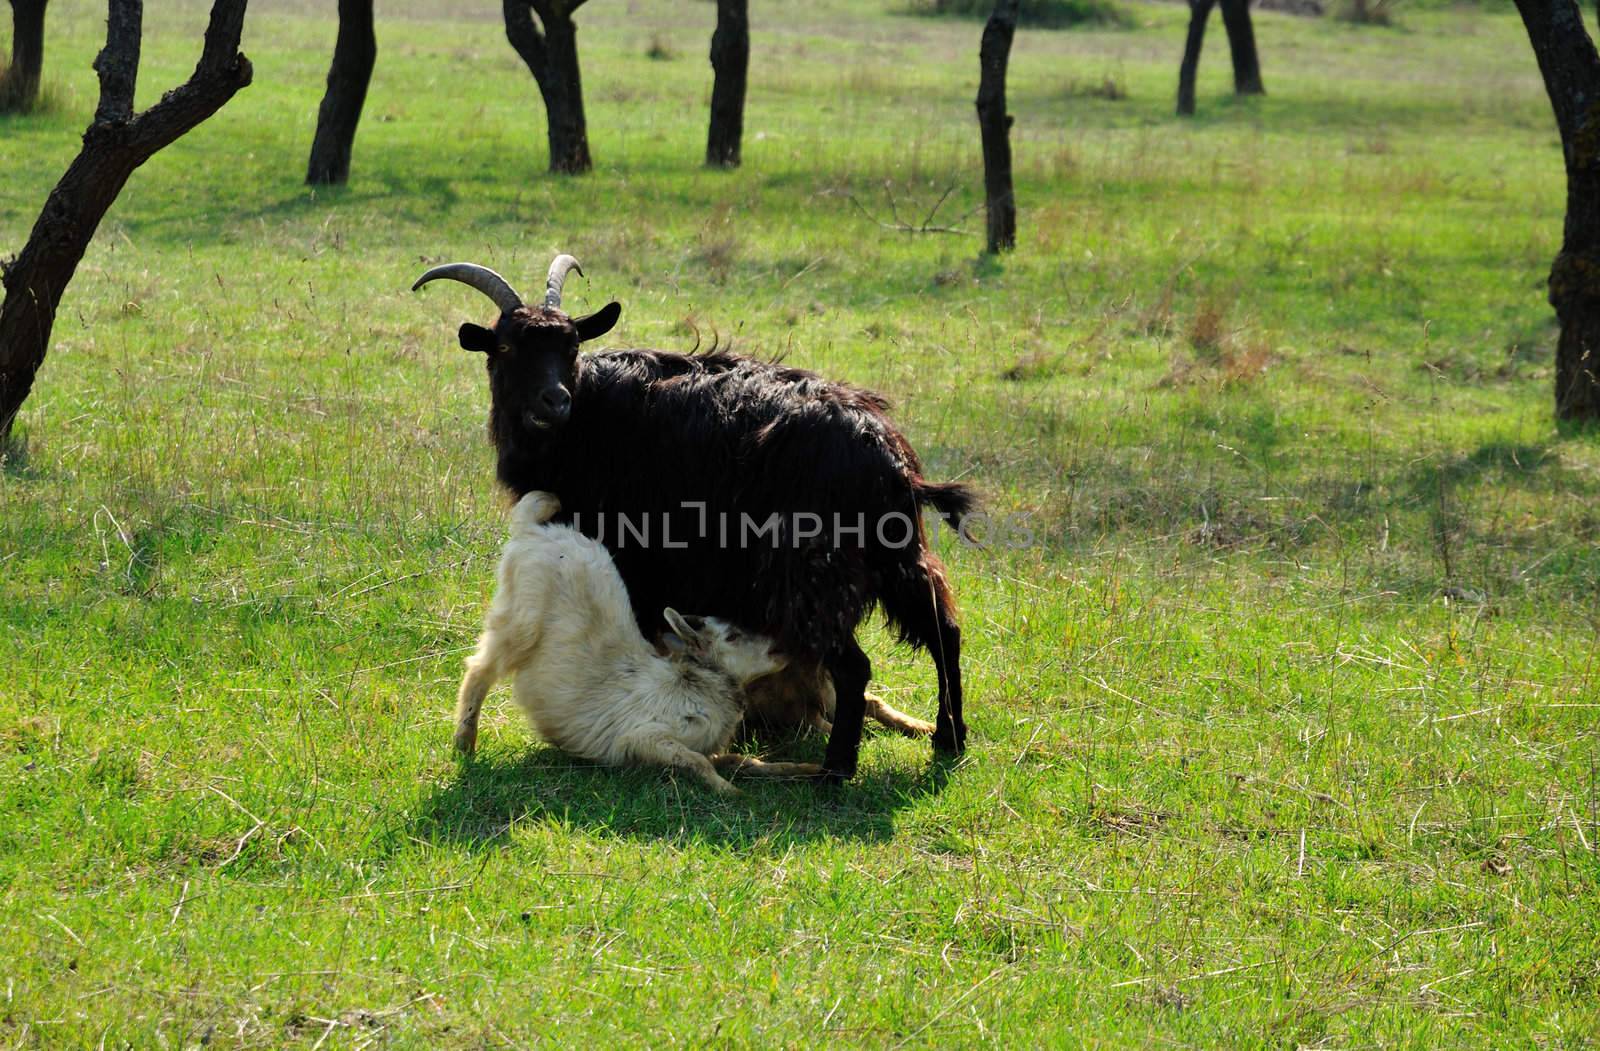 nanny-goat is nursing its kids  by Reana